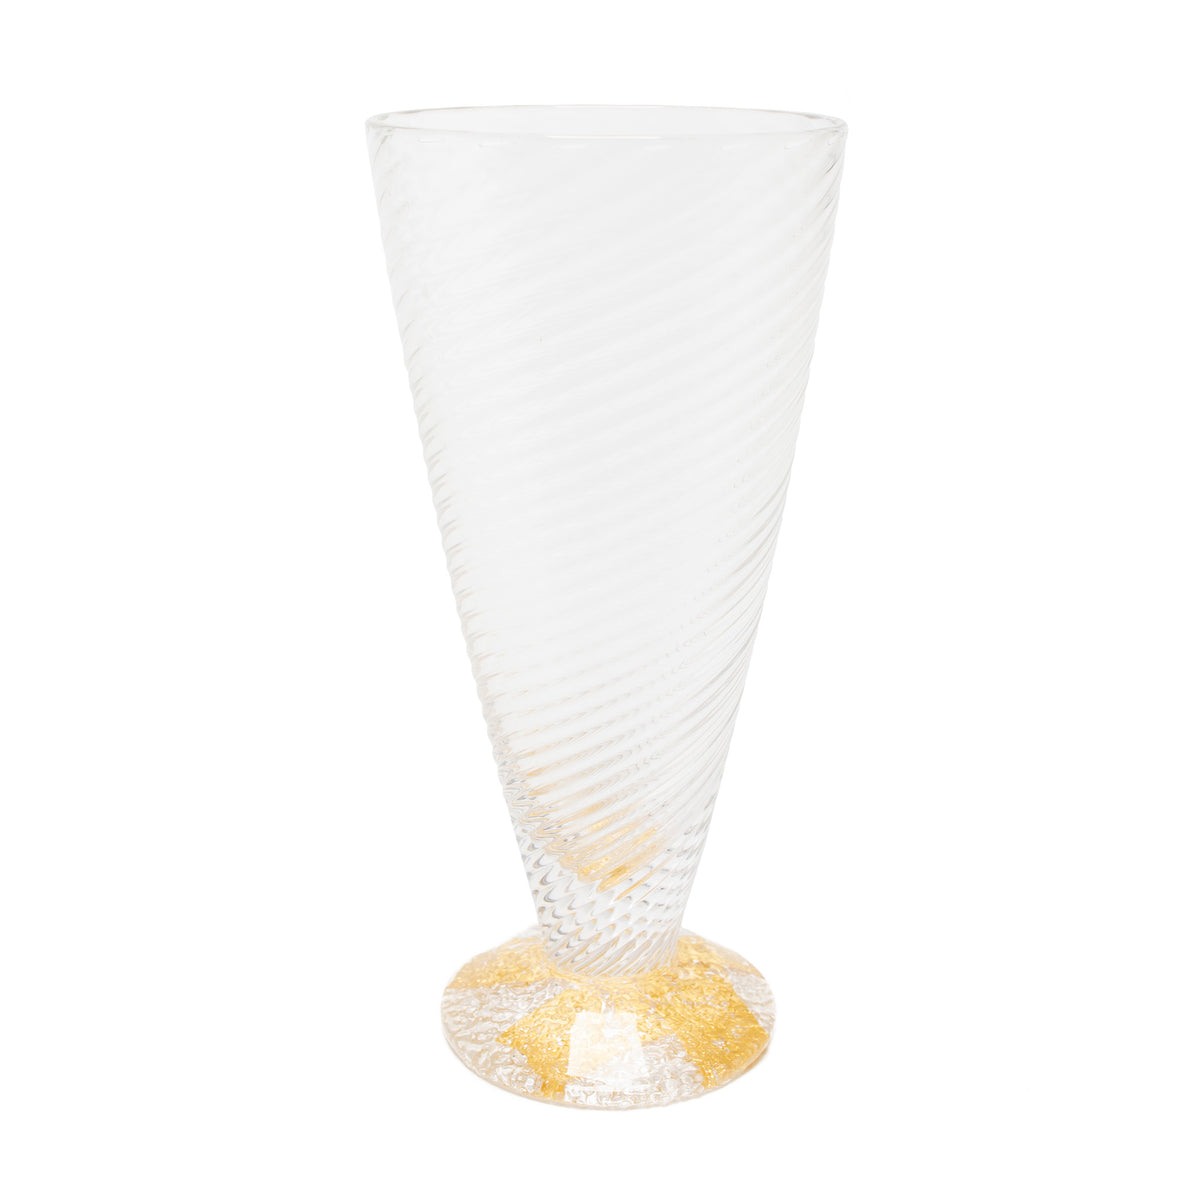 Wine Goblet - Handblown Glass with Gold Leaf